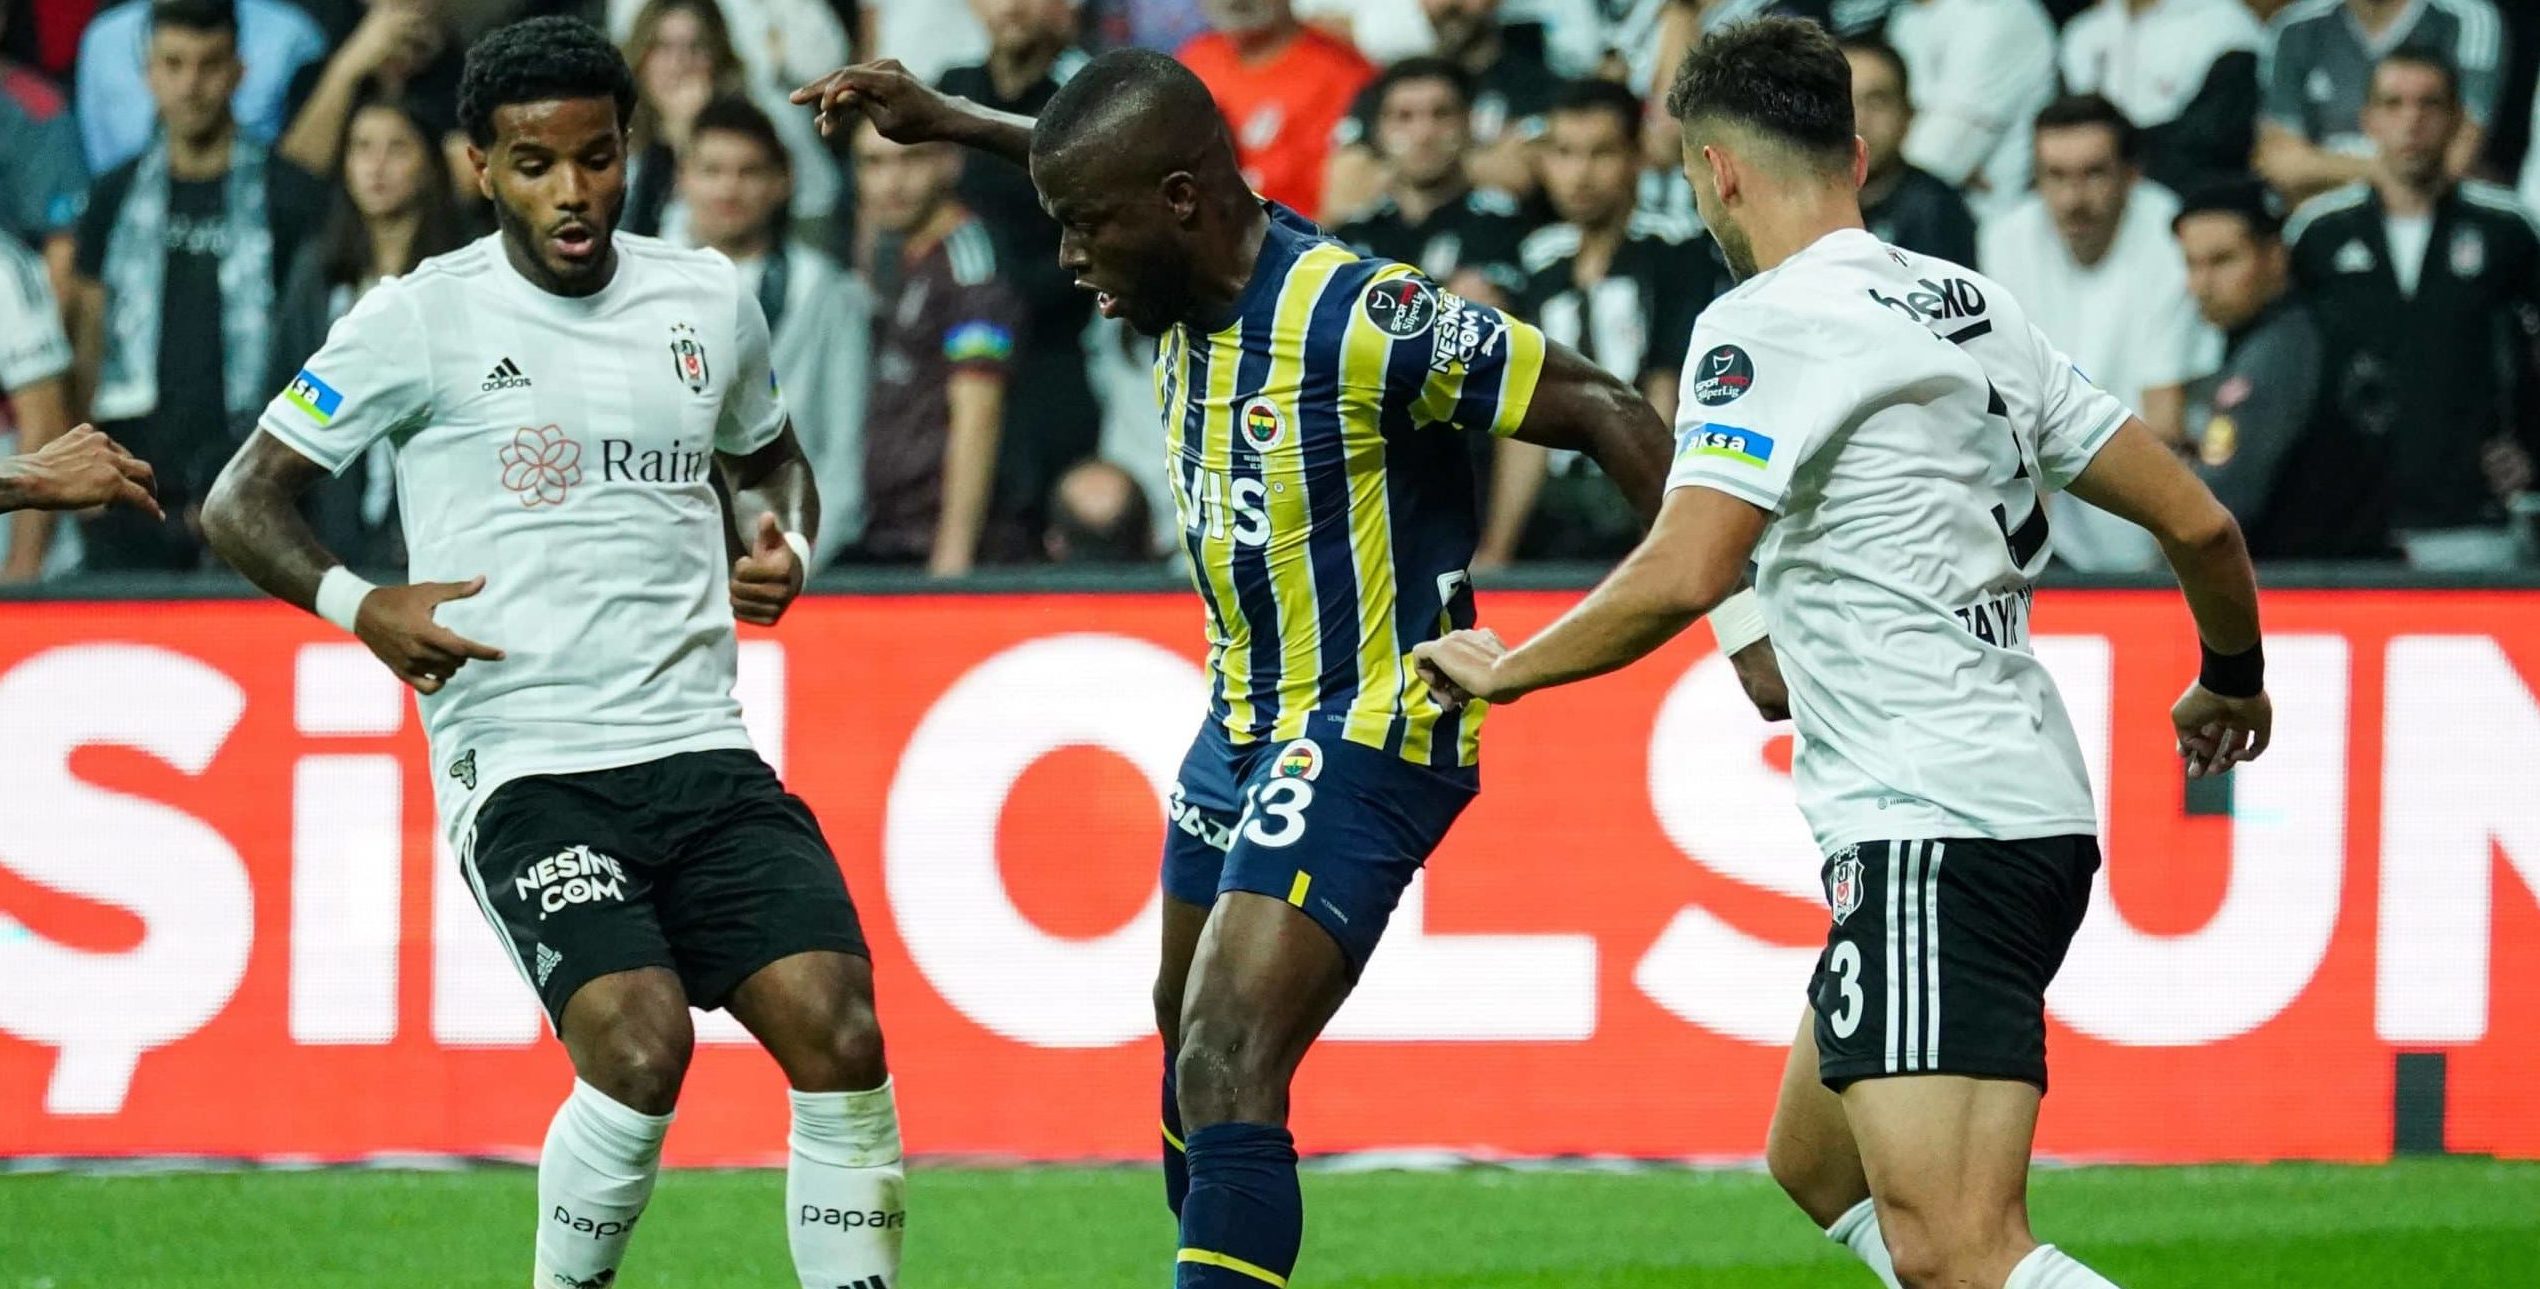 Ankaragücü vs Fenerbahçe: A Historic Football Rivalry